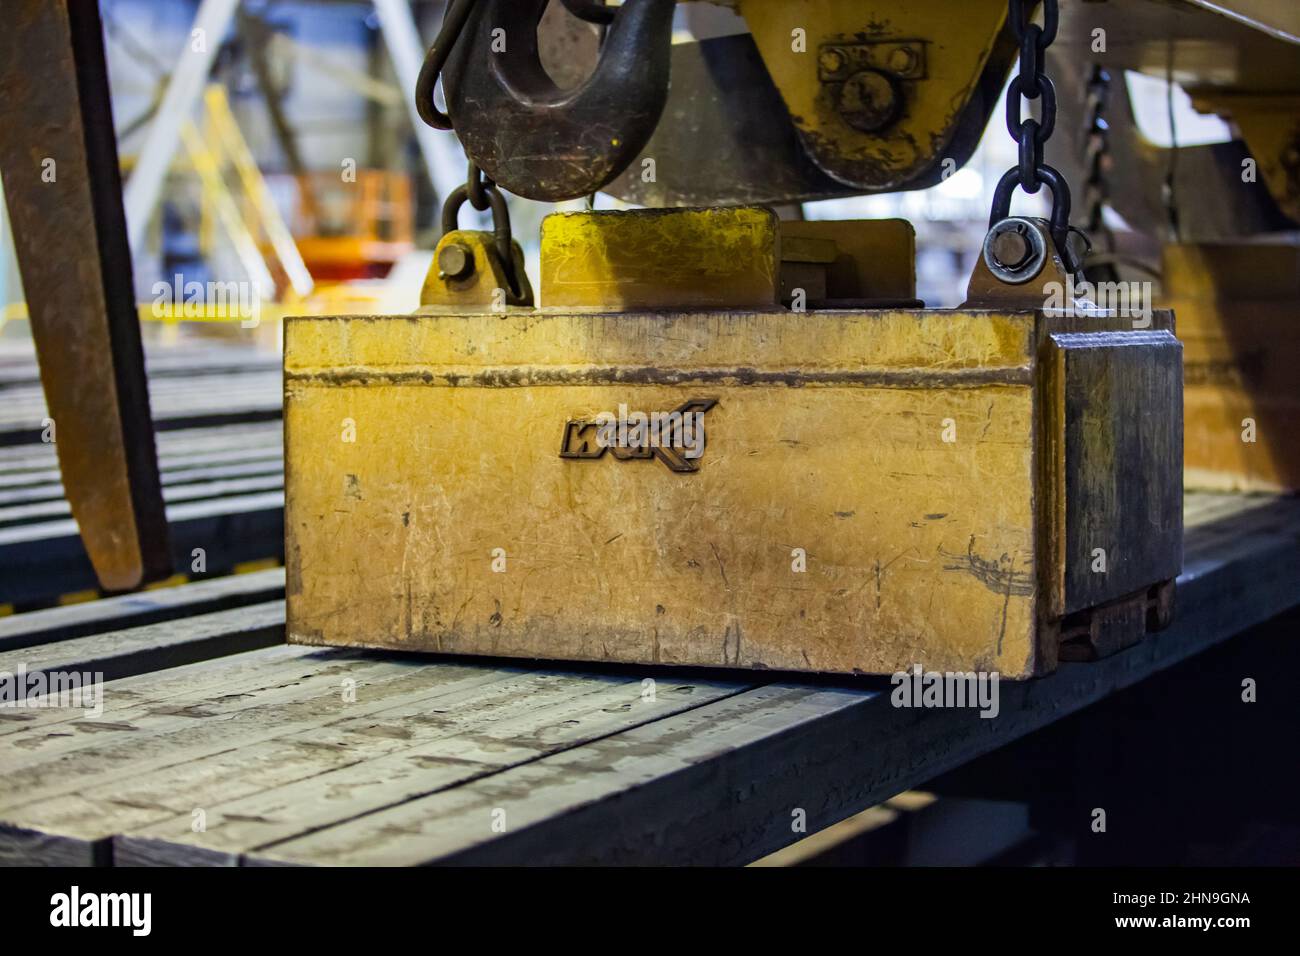 Temirtau, Kazakhstan - June 08, 2012: Arcelor Mittal metallurgy plant. Crane with lifting magnet WOKO for square bar metal. Close-up photo. Stock Photo